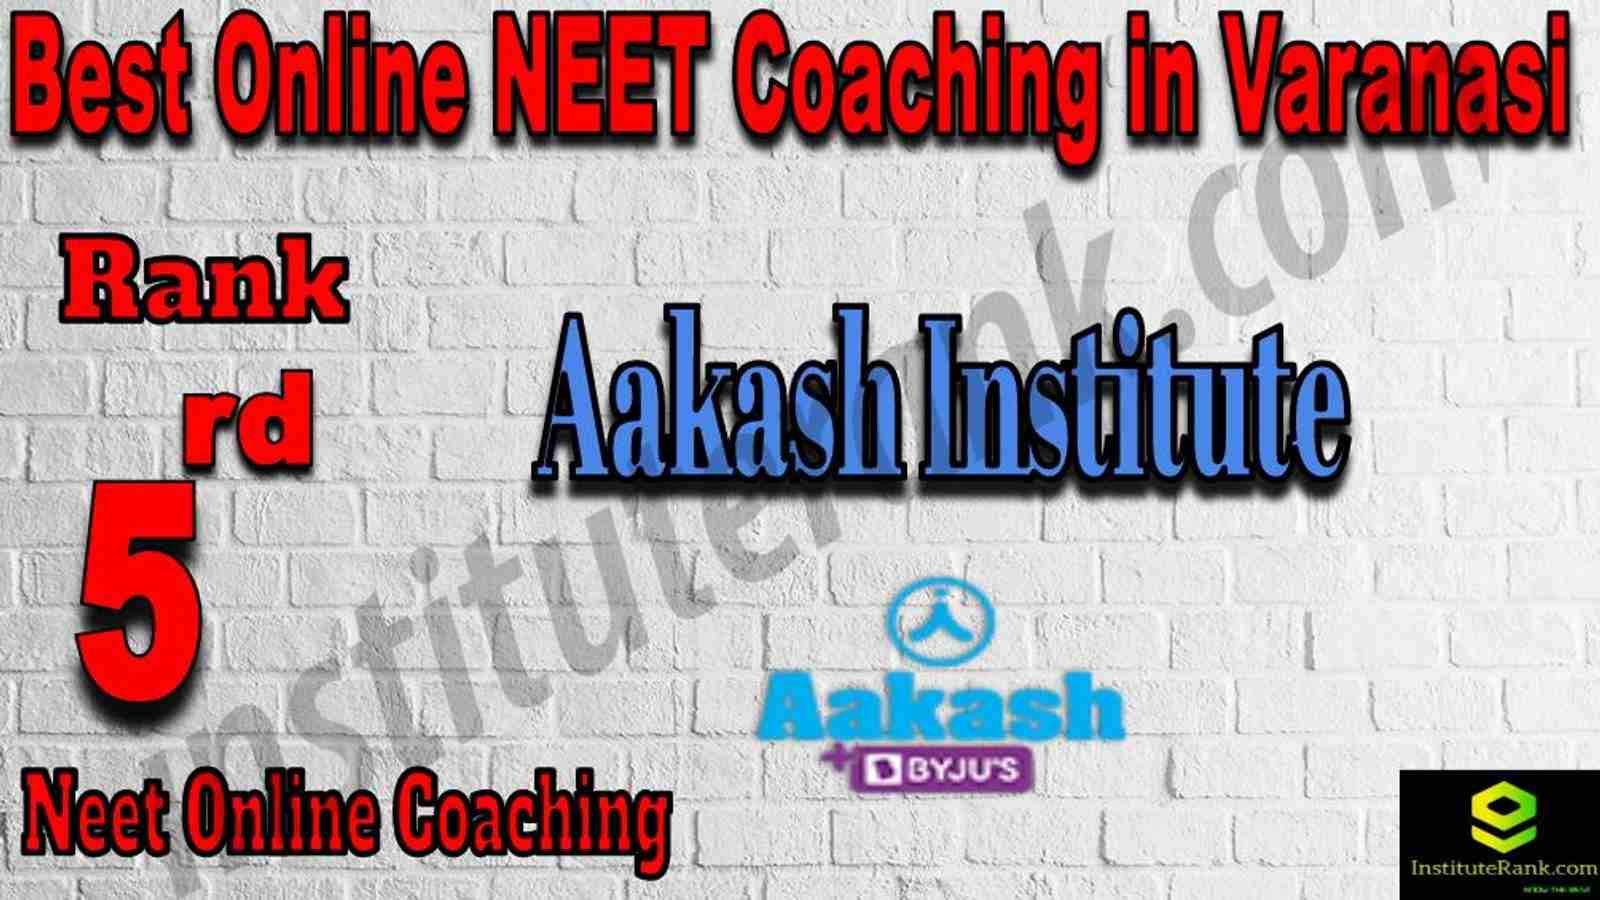 5th Best Online Neet Coaching in Varanasi